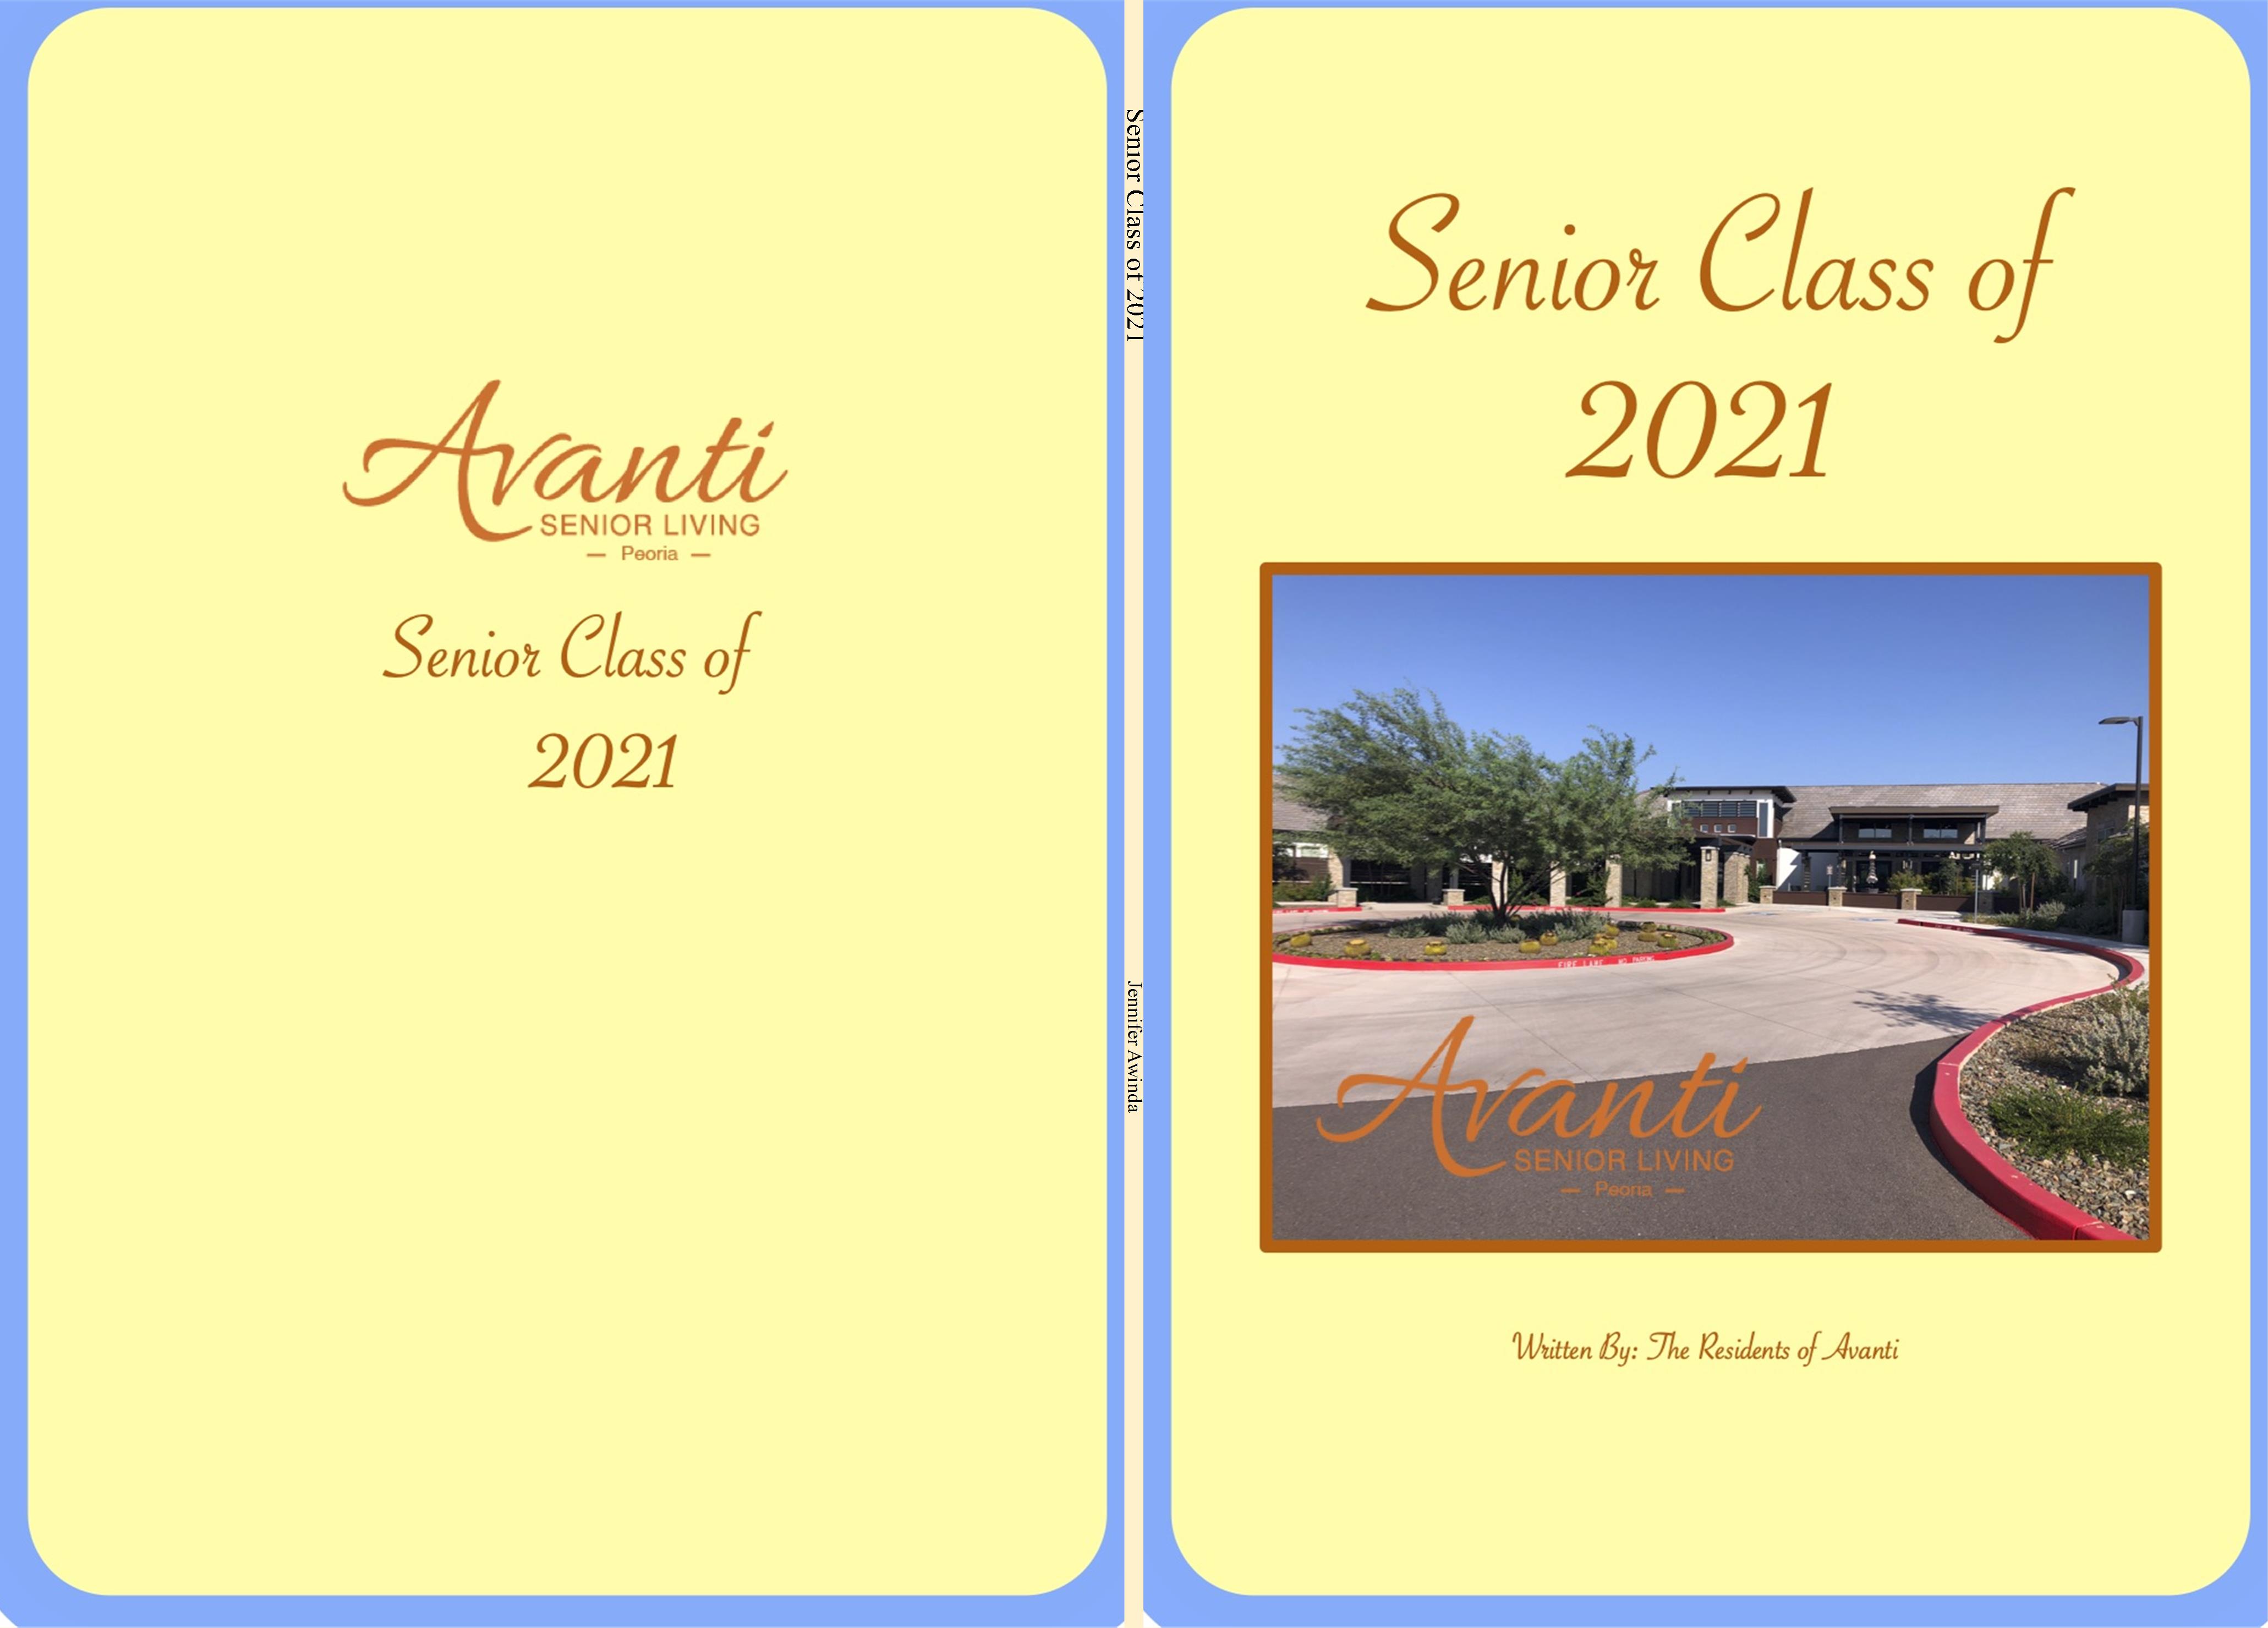 Senior Class of 2021 cover image